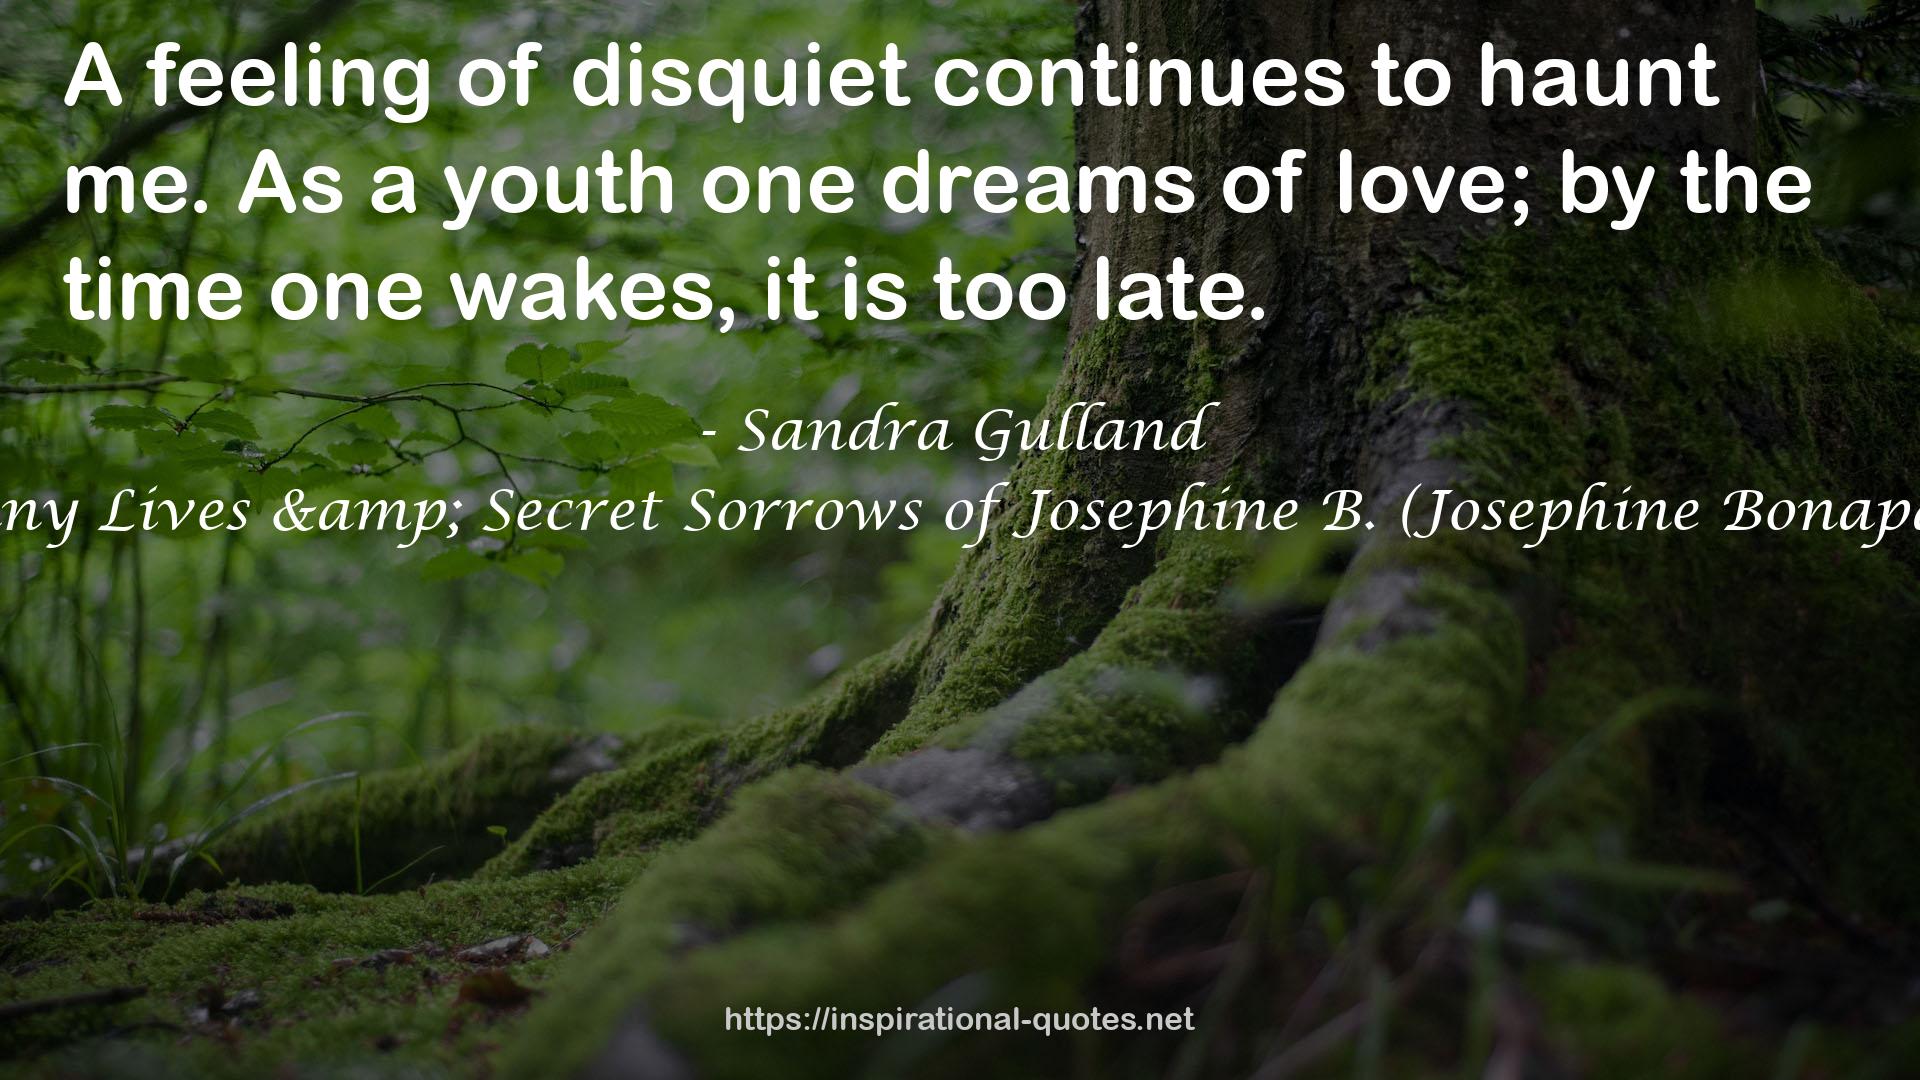 The Many Lives & Secret Sorrows of Josephine B. (Josephine Bonaparte, #1) QUOTES